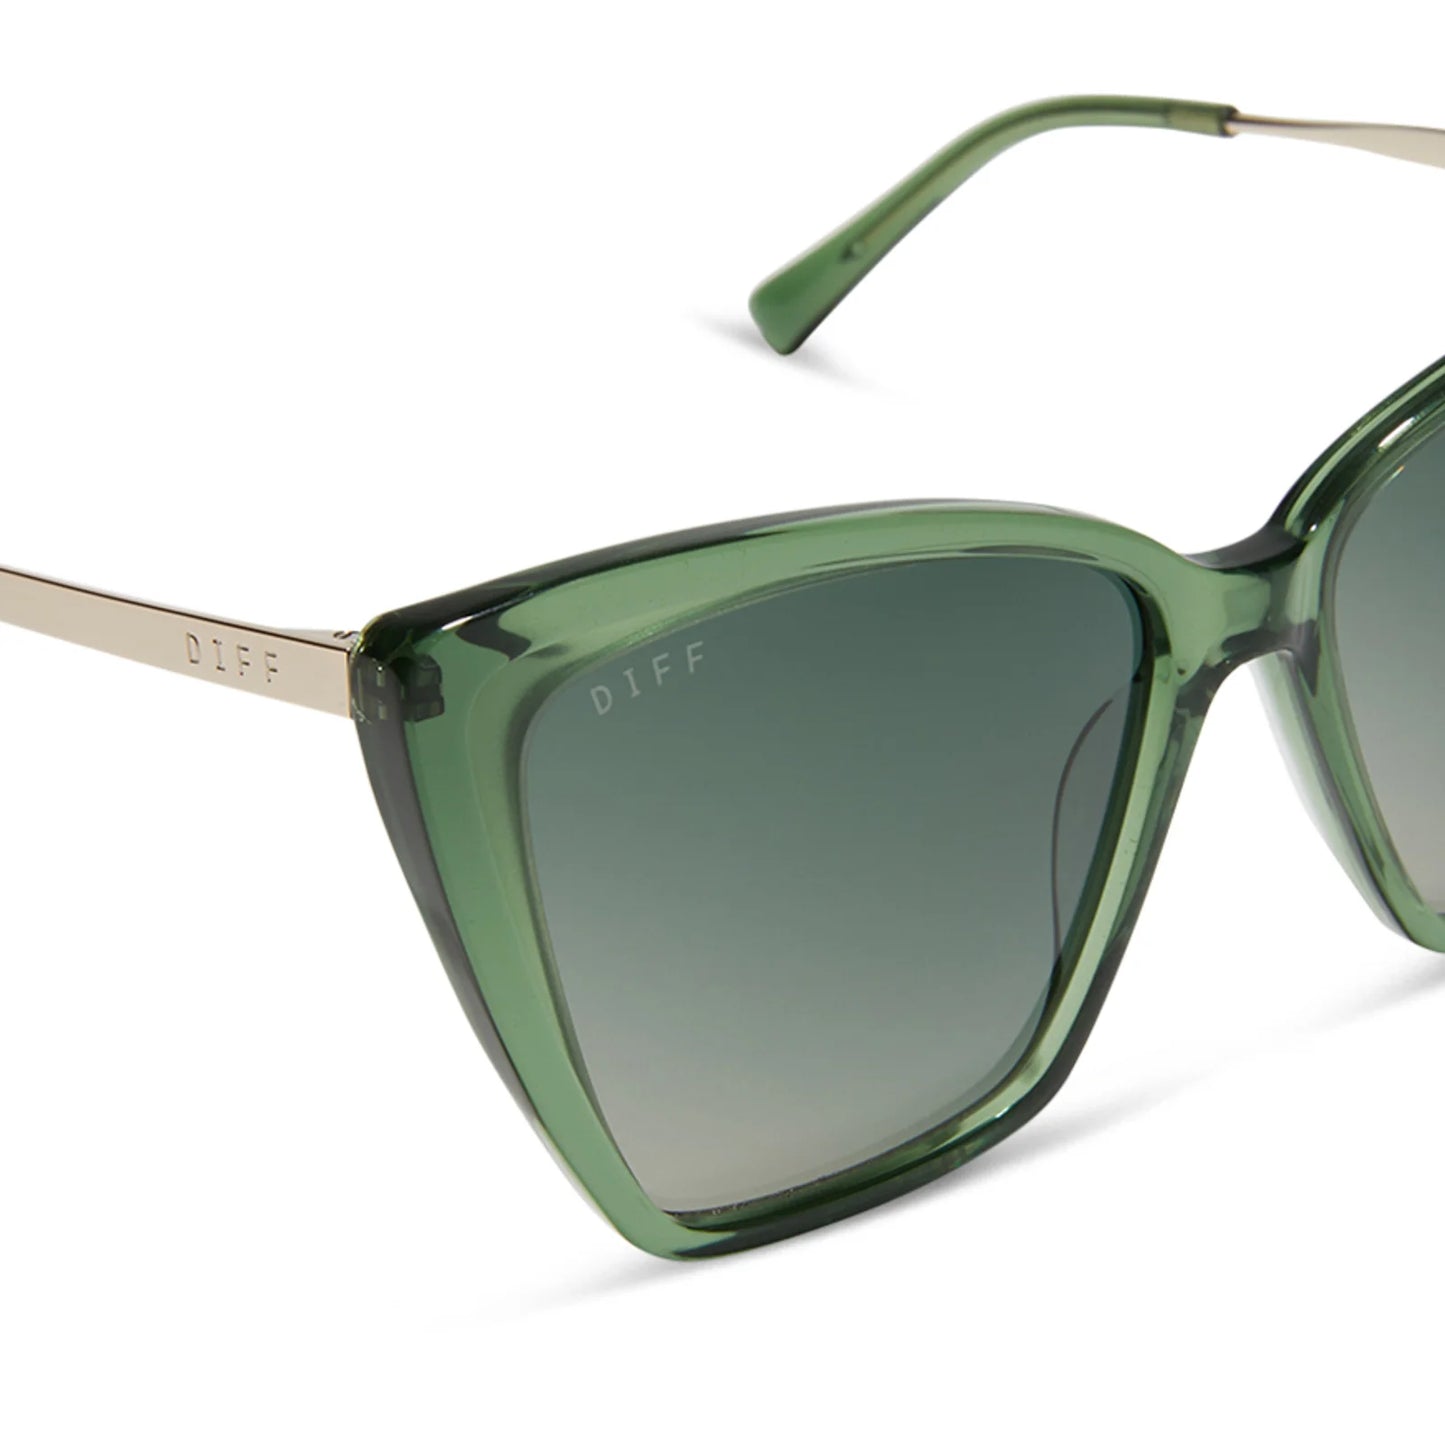 DIFF Eyewear - Becky II - Sage Crystal G15 Gradient Polarized Sunglasses